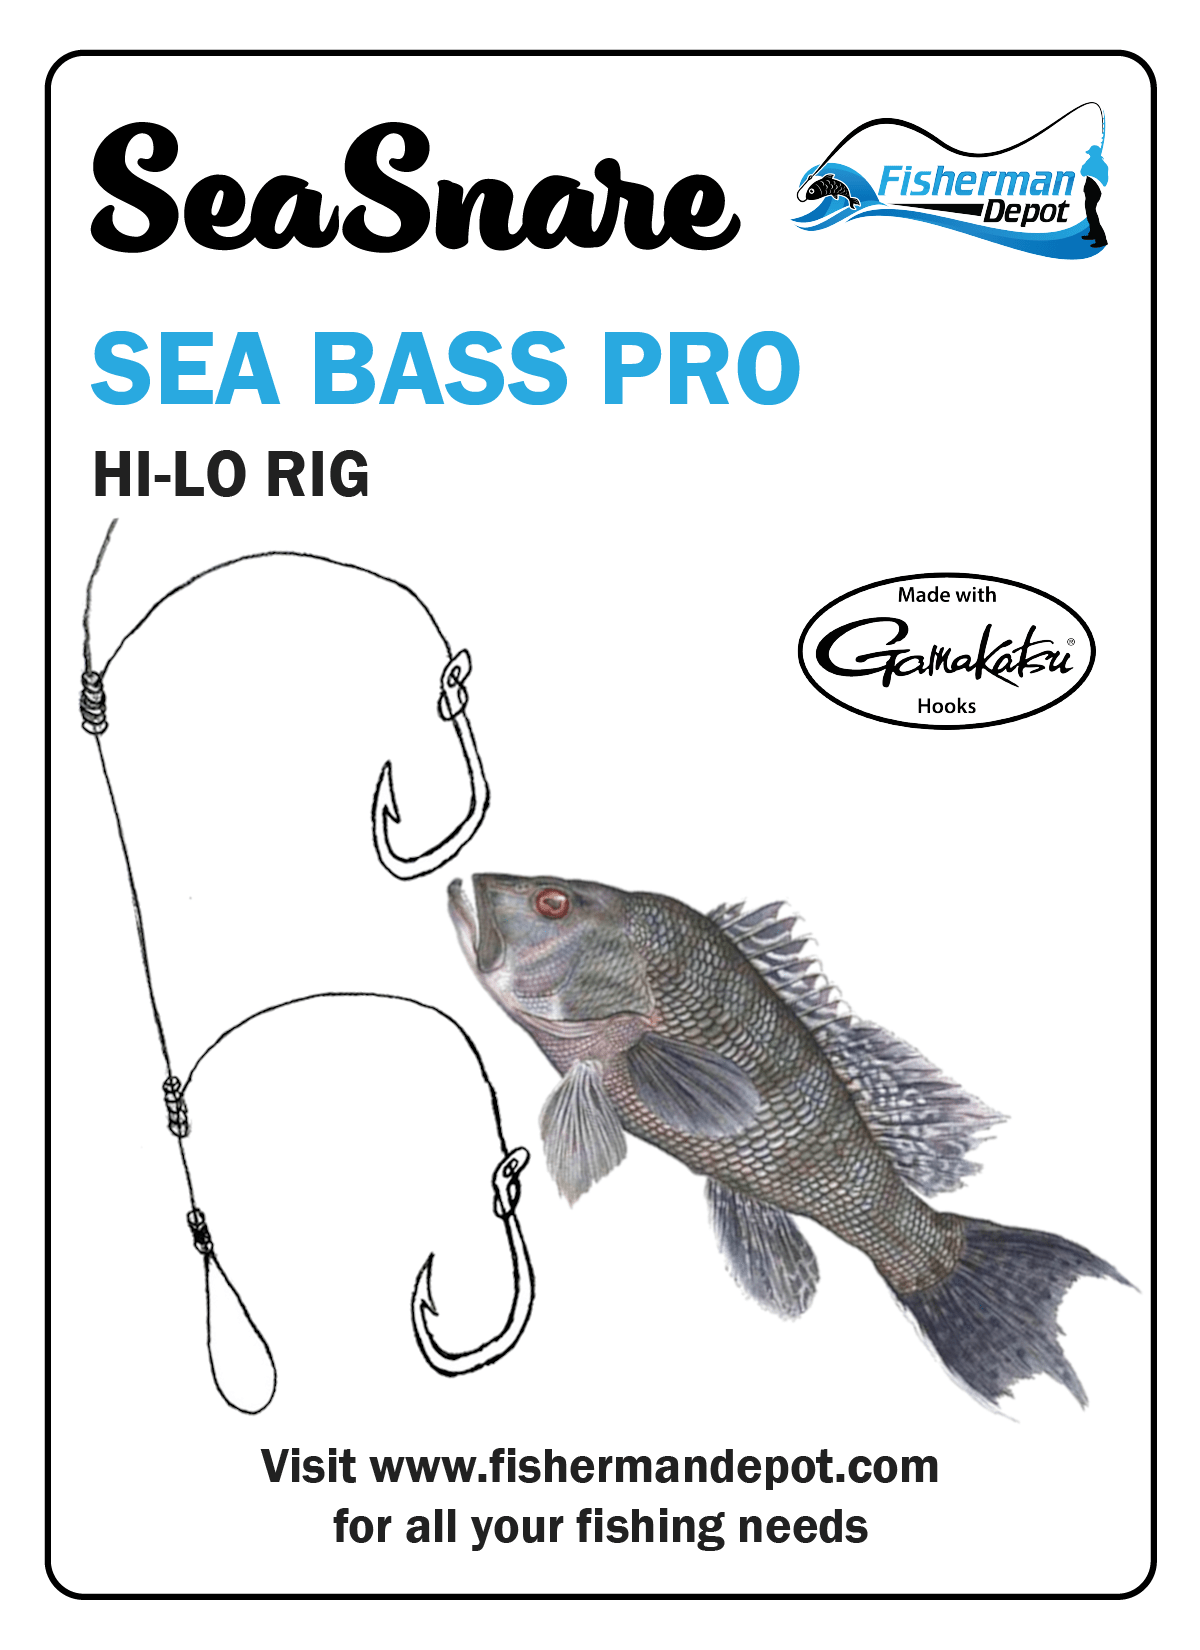 SeaSnare Sea Bass Pro - Hi-Lo Rig